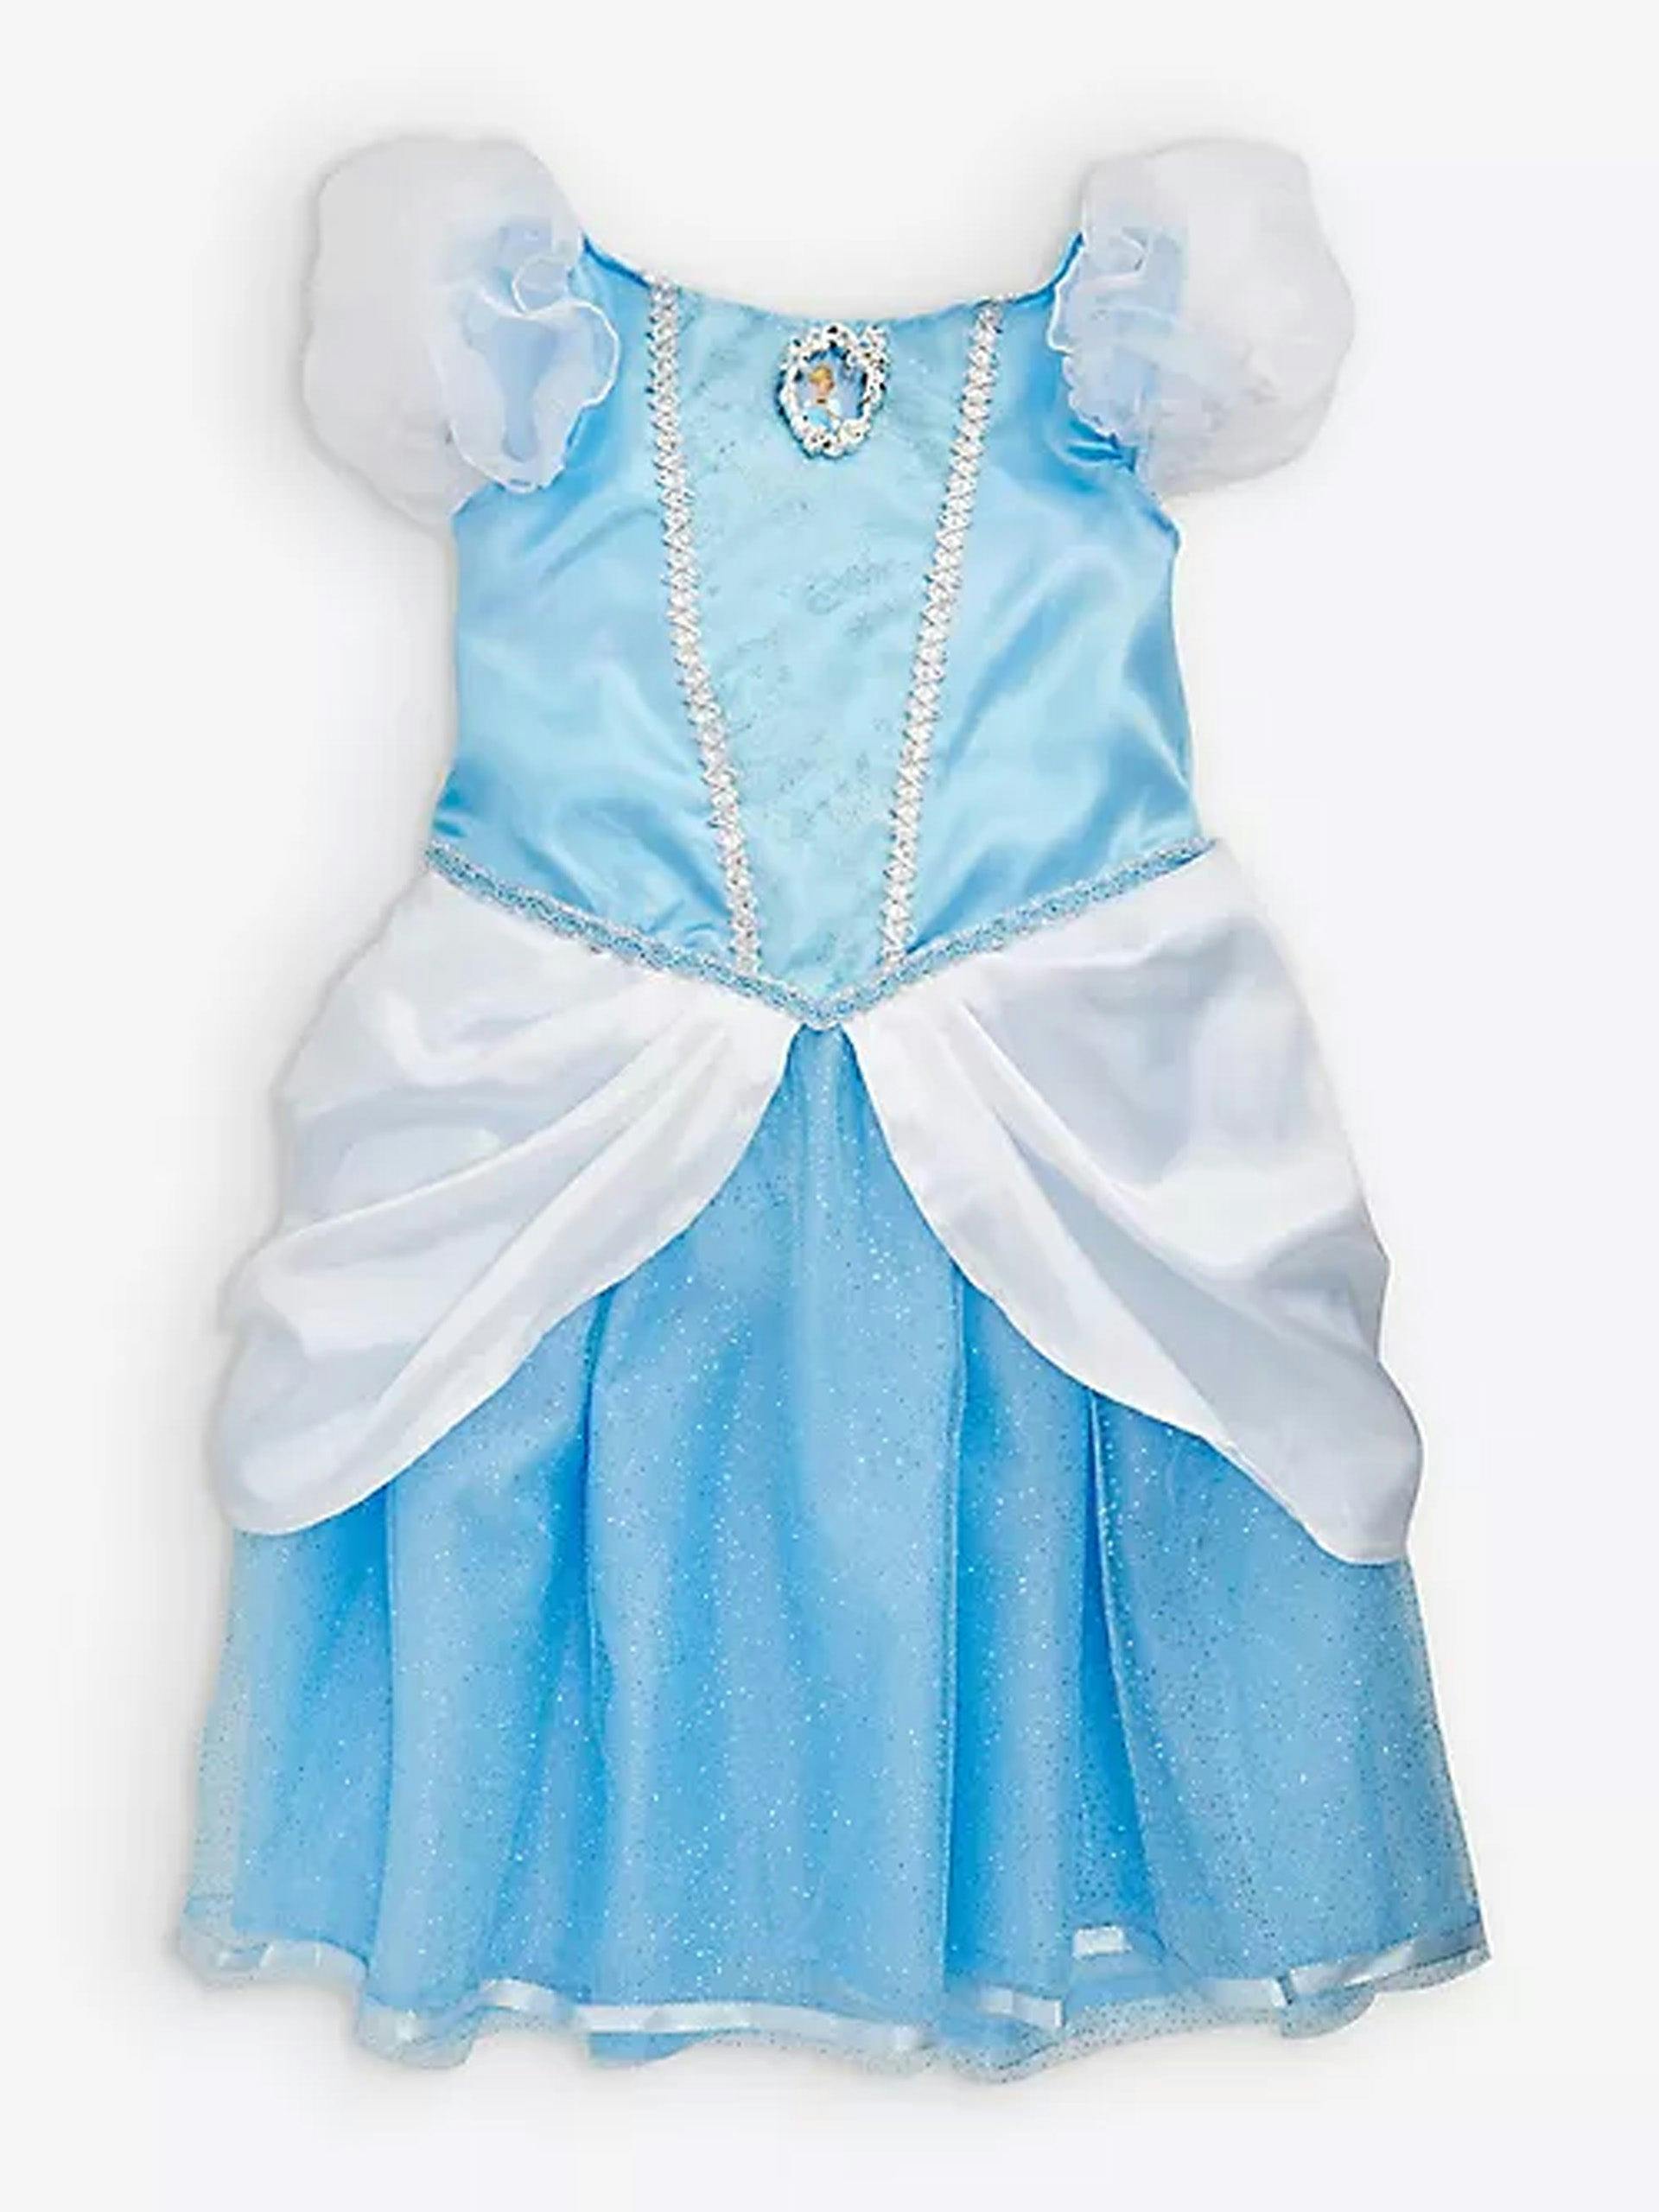 Cinderella fancy dress costume